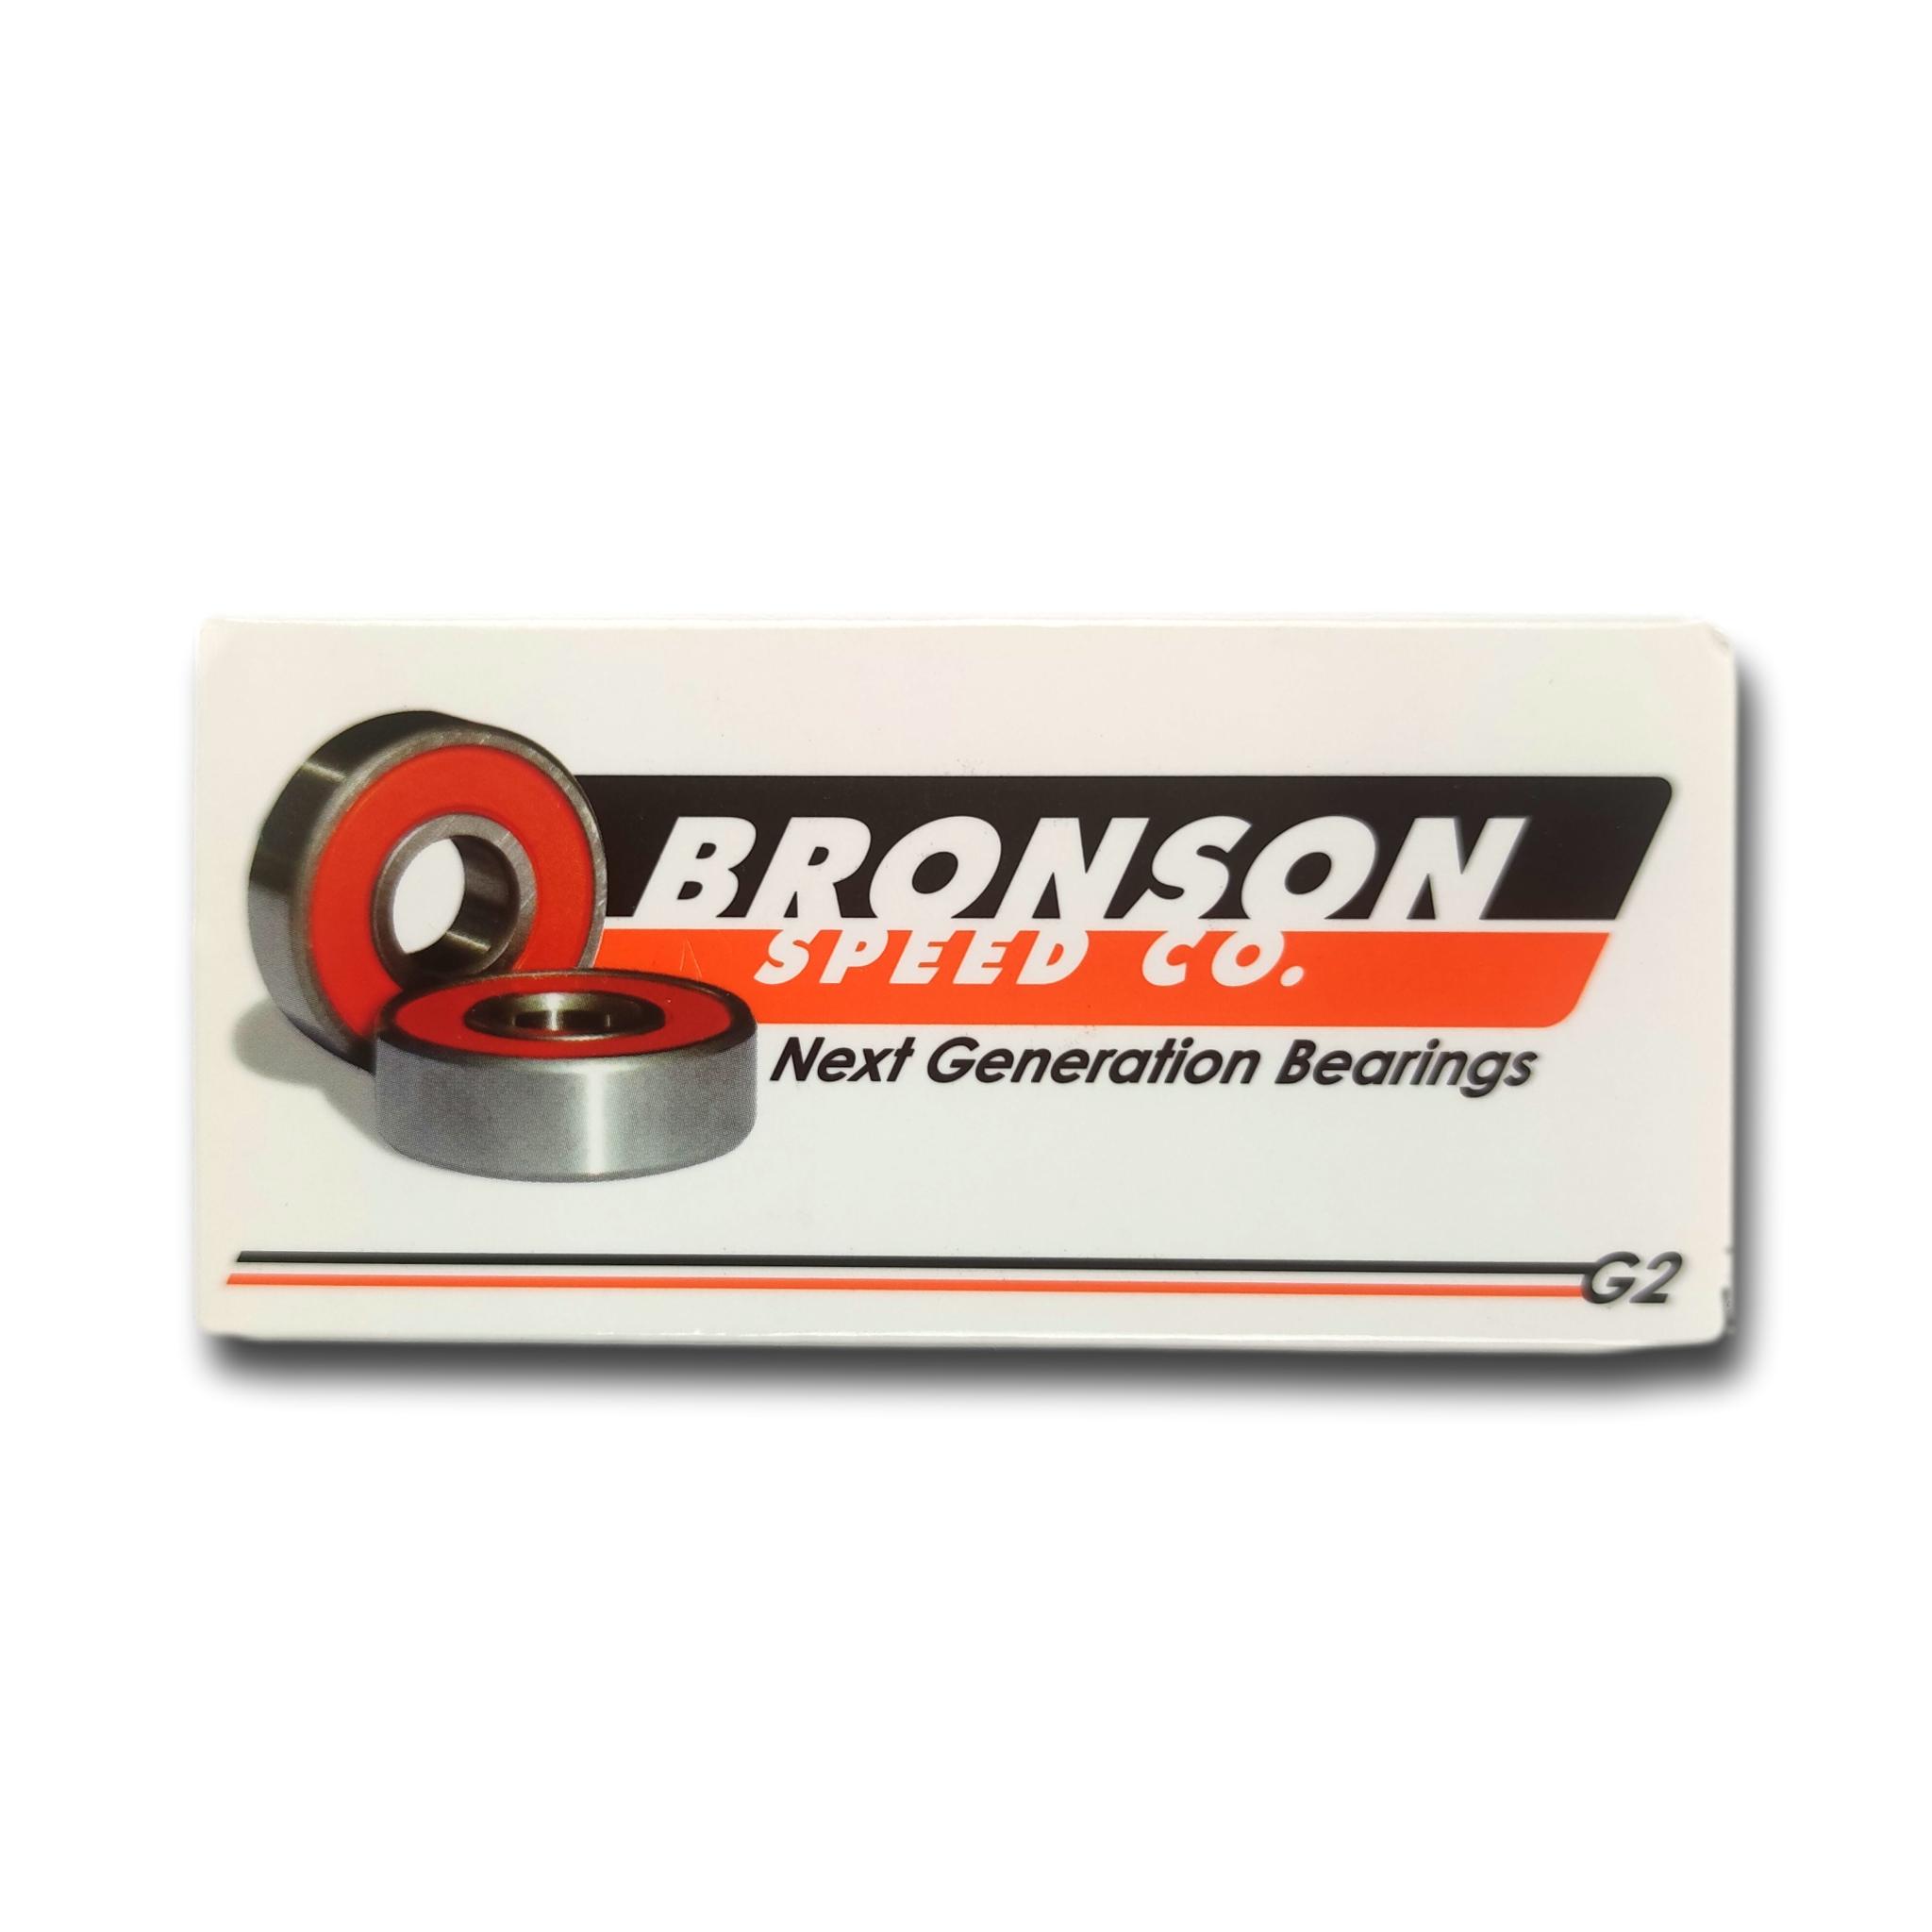 BRONSON SKATEBOARD BEARINGS G2 NEXT GENERATION